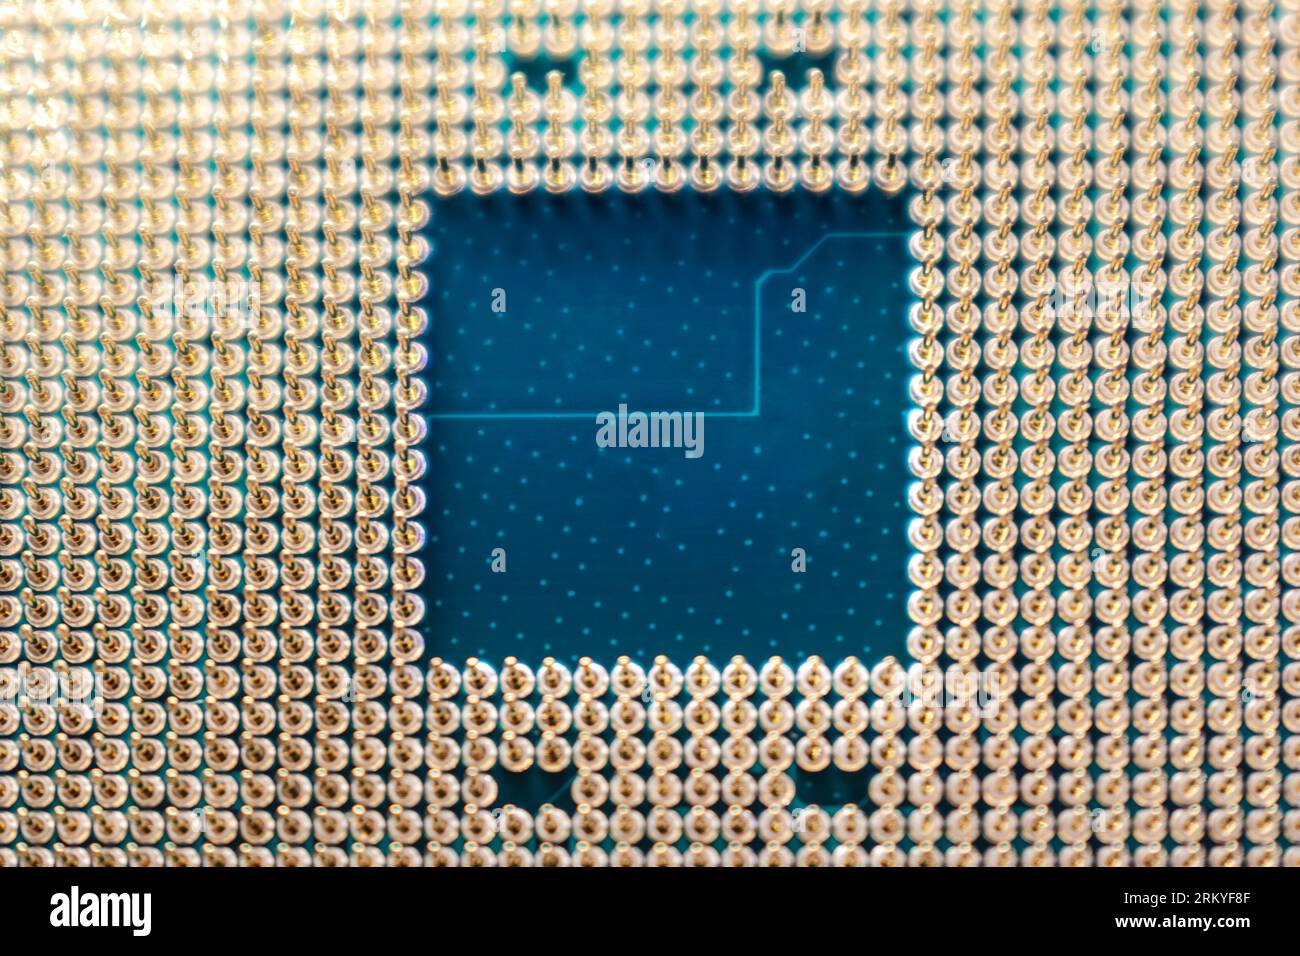 CPU microchip golden pins contacts close-up. Desktop PC computer processor unit details with selective focus view Stock Photo